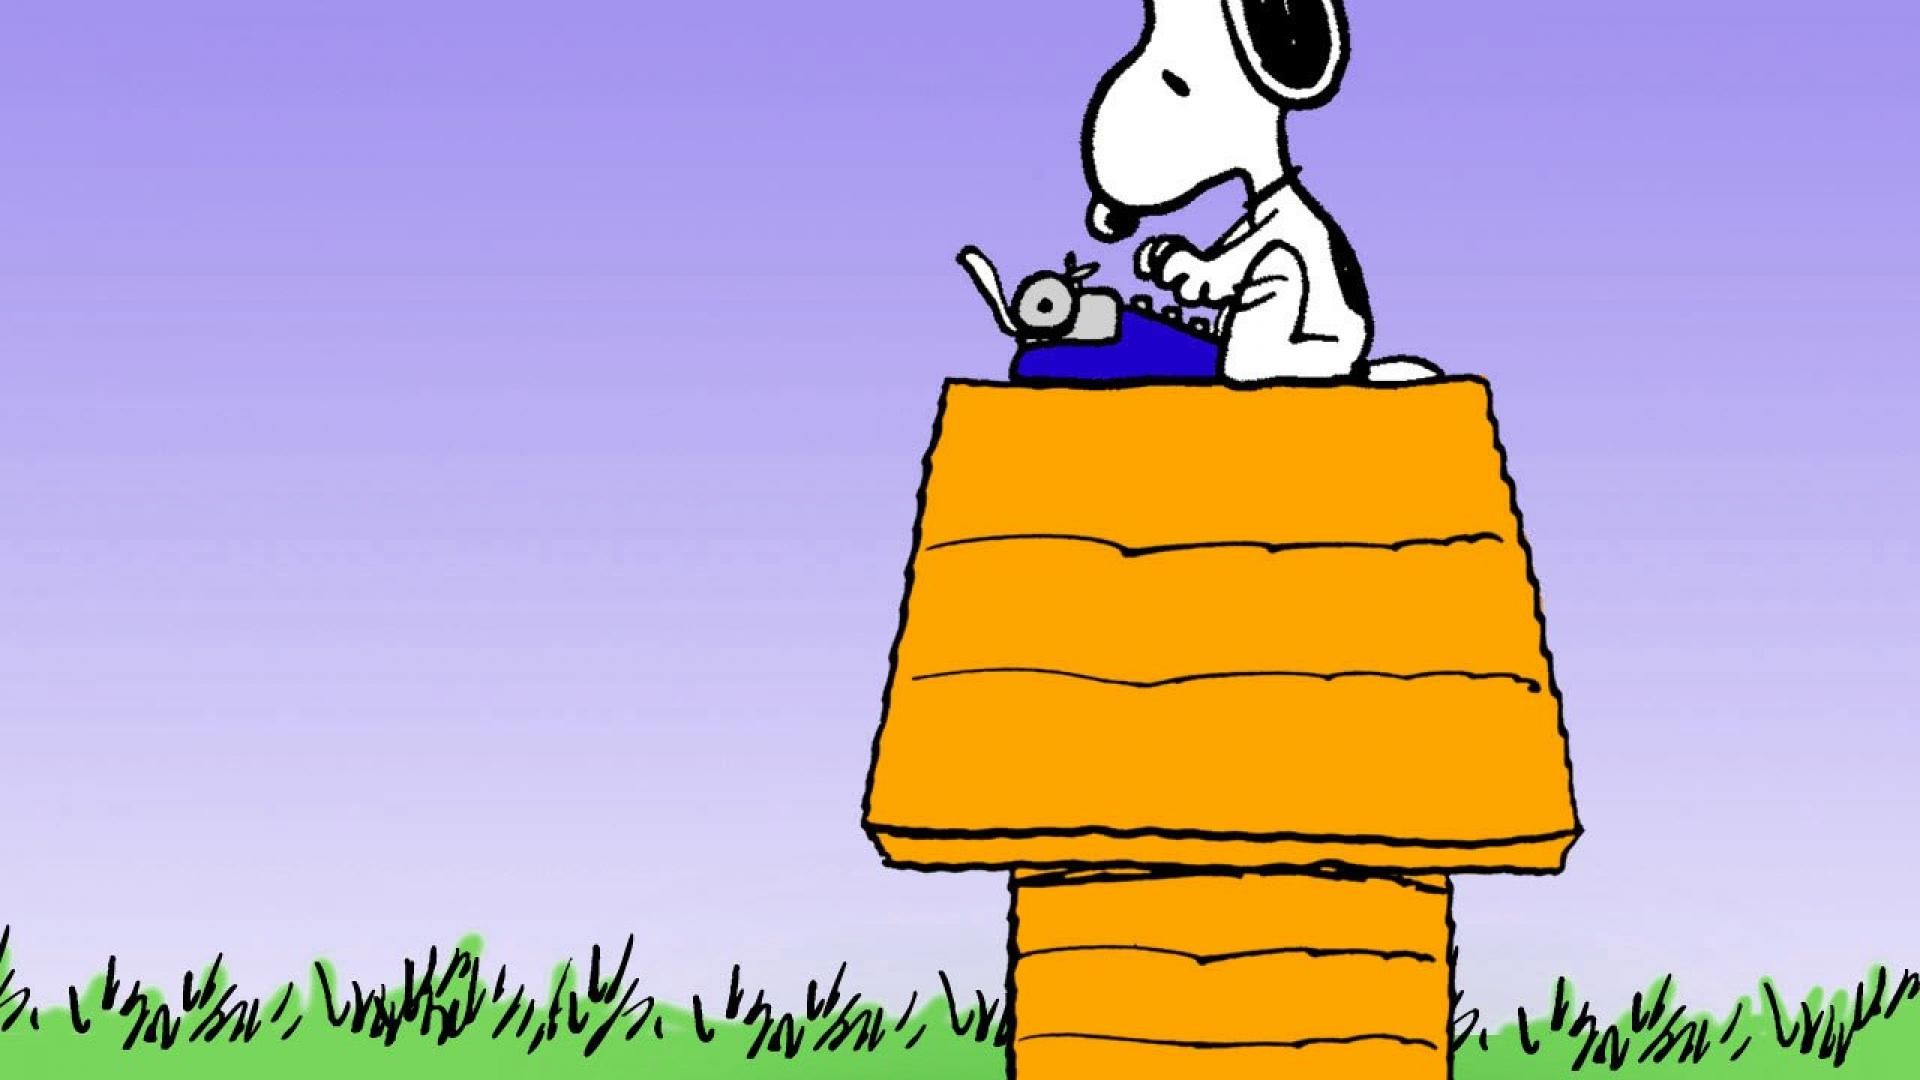 Fondos de pantalla de Snoopy - FondosMil